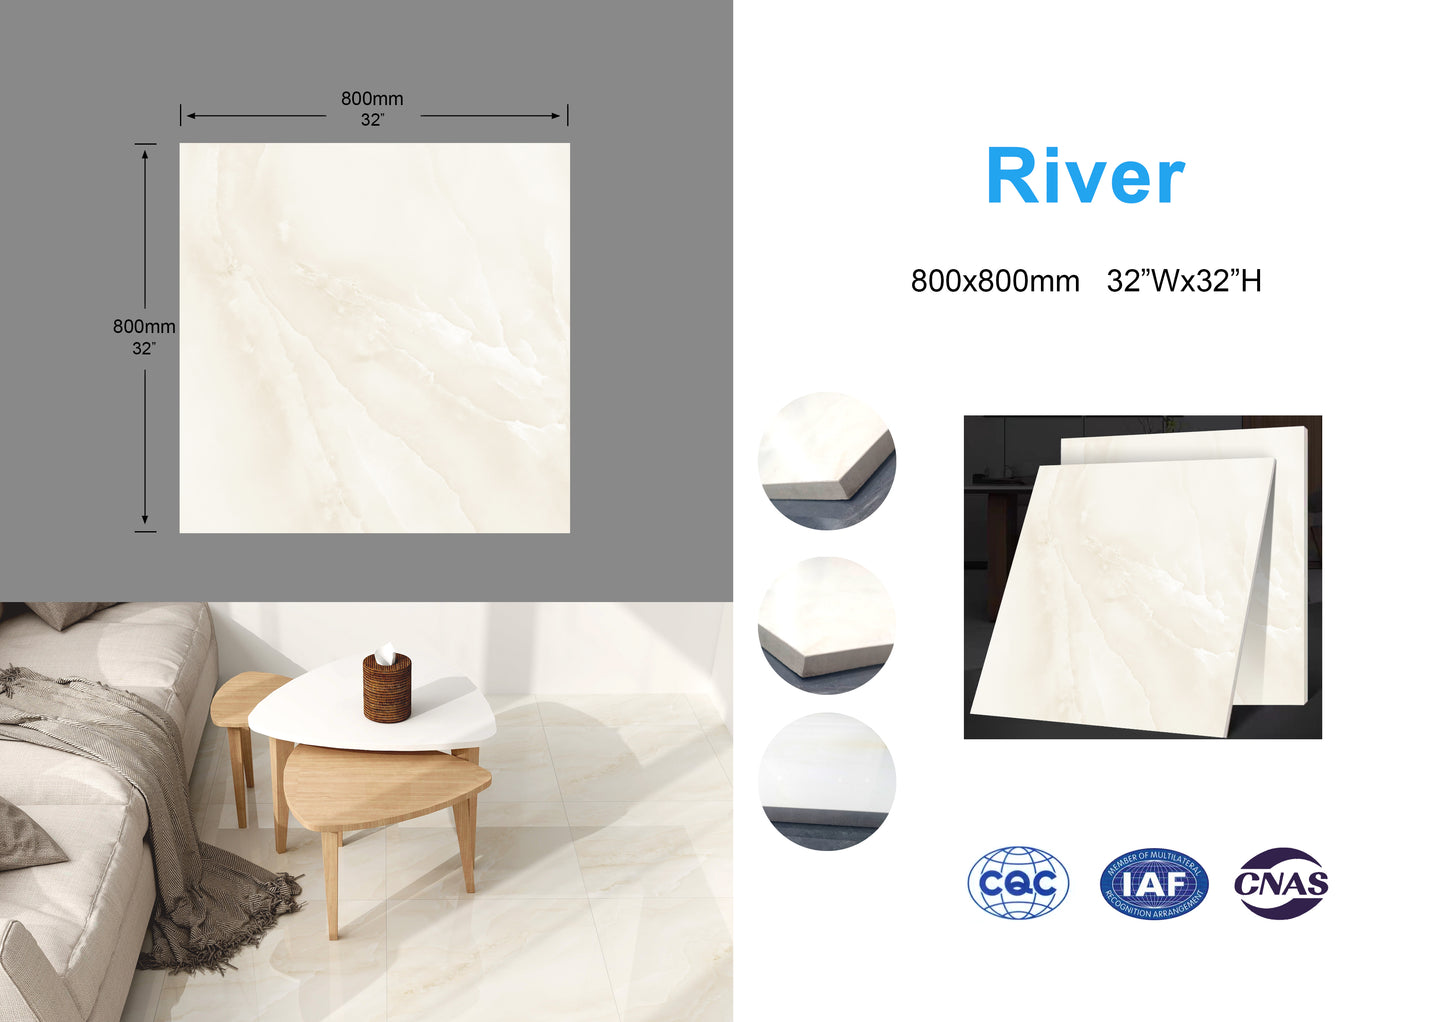 River family Full Polished Glazed Tile 32"x32" 3pcs/box 21.33sf/box $1.59/sf (15 days return/exchange) Bulk Deal 1000sf+ $1.39/SF(No return/no exchange)